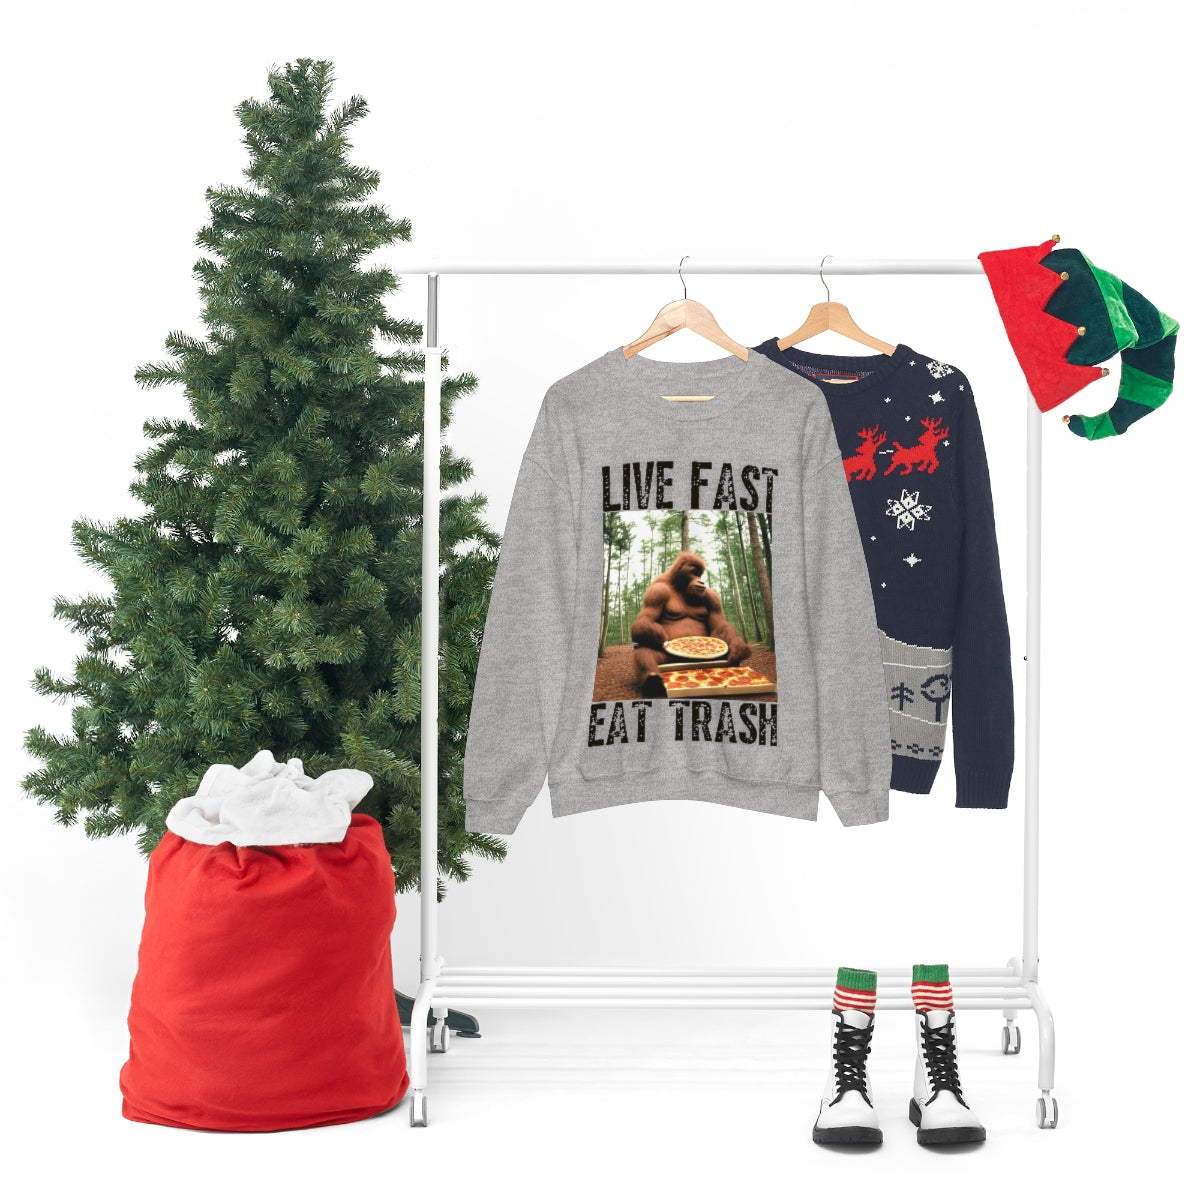 Bigfoot Eats Pizza 'Live Fast Eat Trash' Sweatshirt